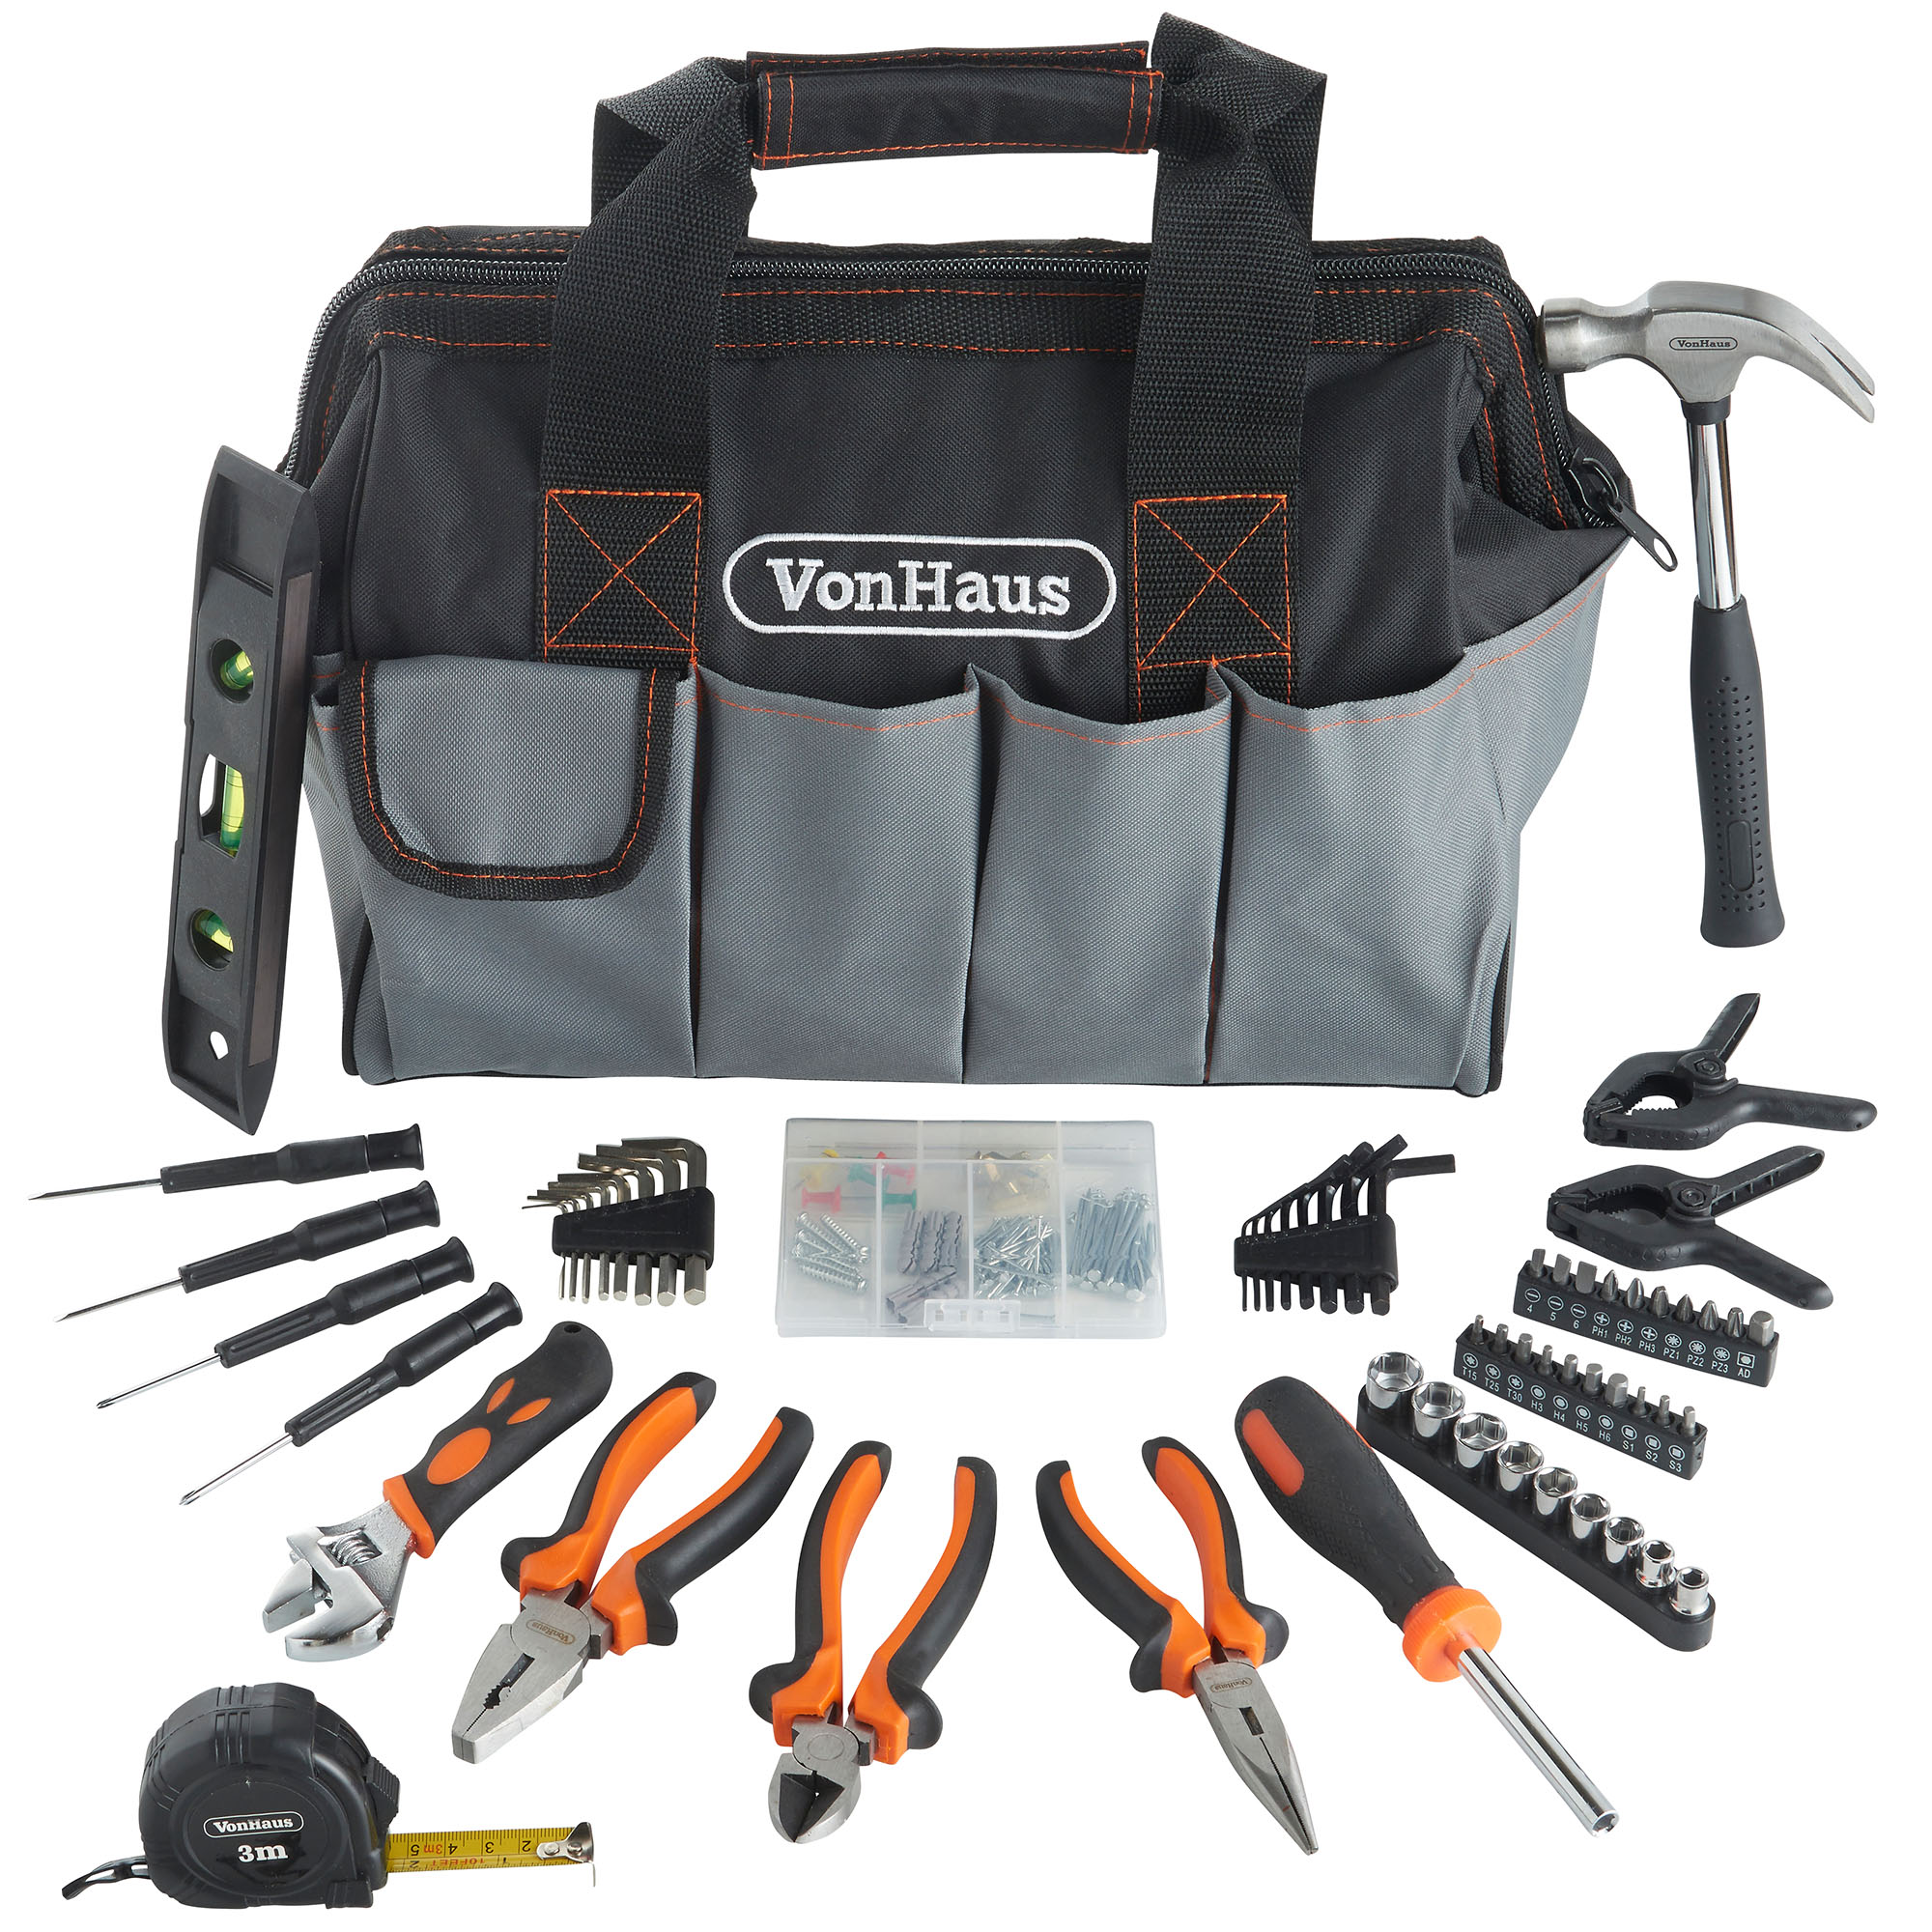 VonHaus 92 Piece Household Tool Kit with Storage Bag